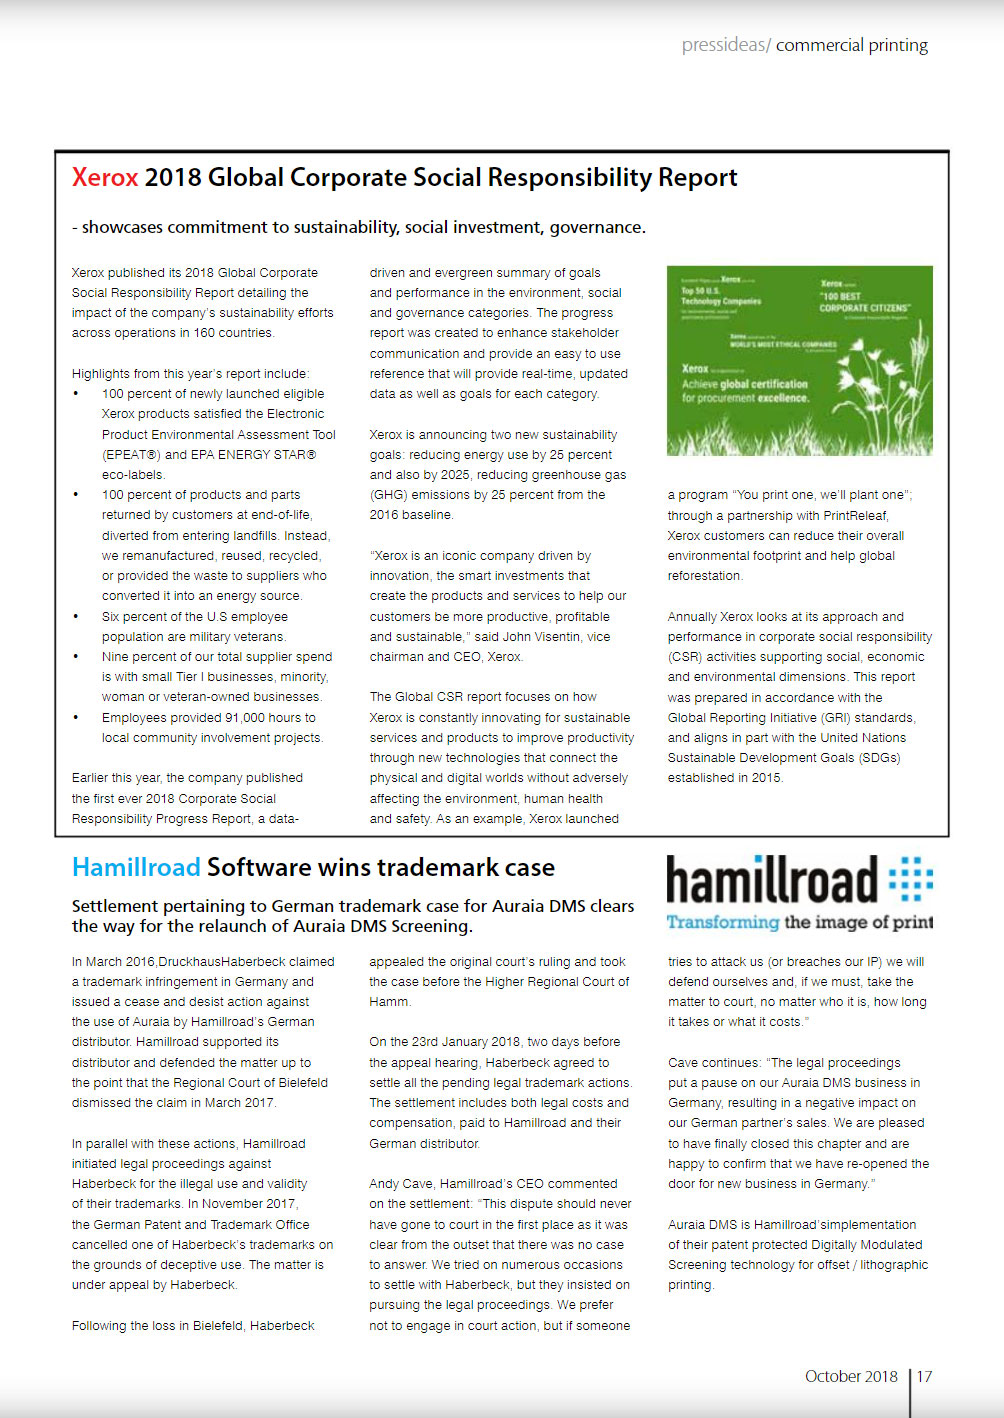 Hamillroad Software wins trademark case